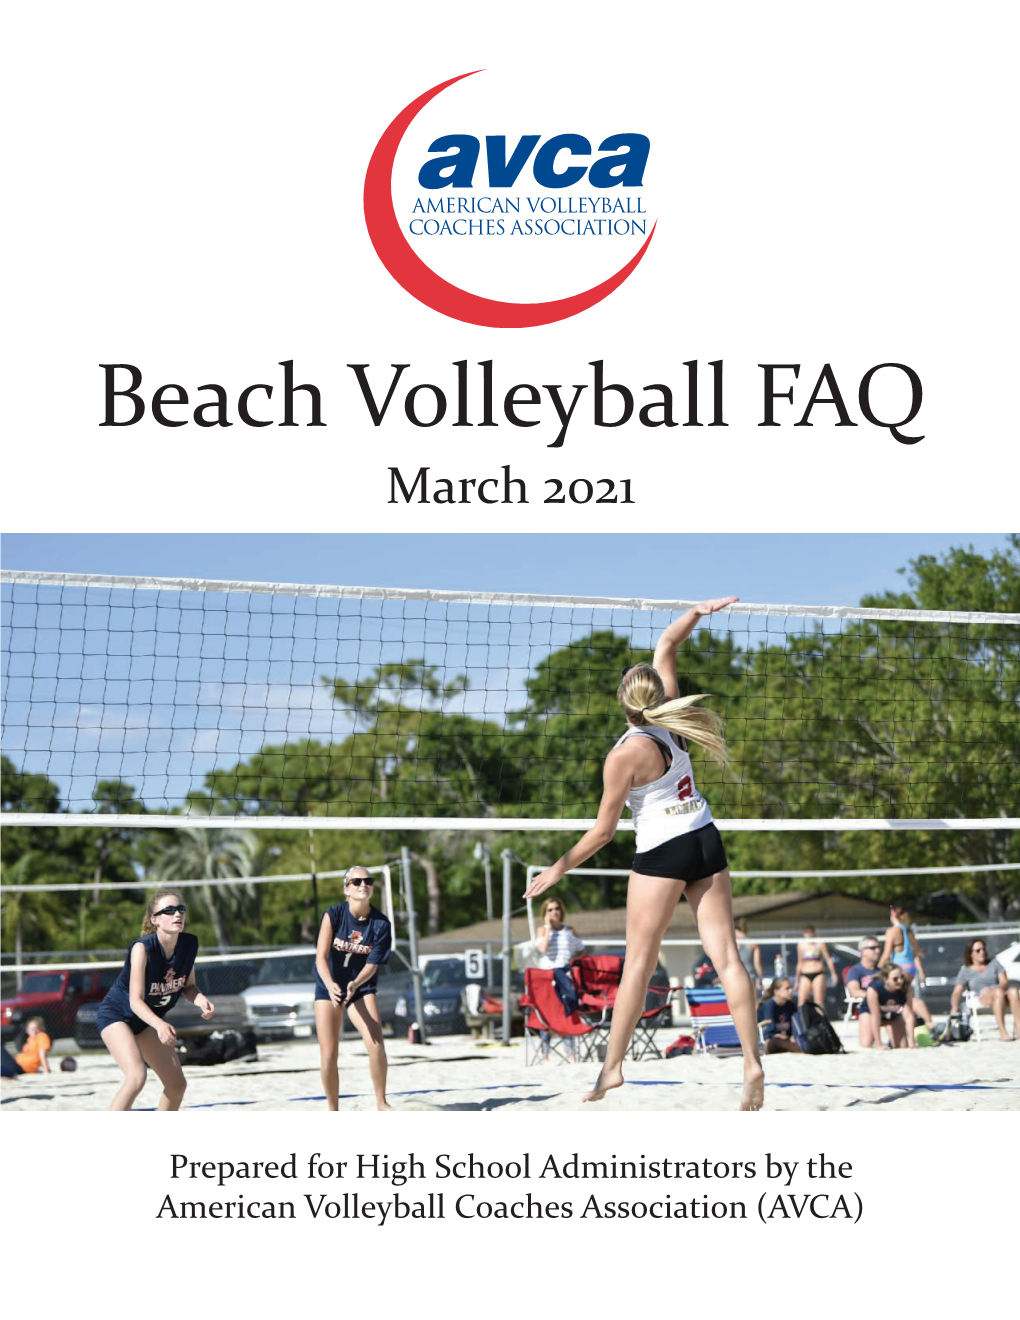 AVCA Beach Volleyball Q&A 2021 V1.Indd